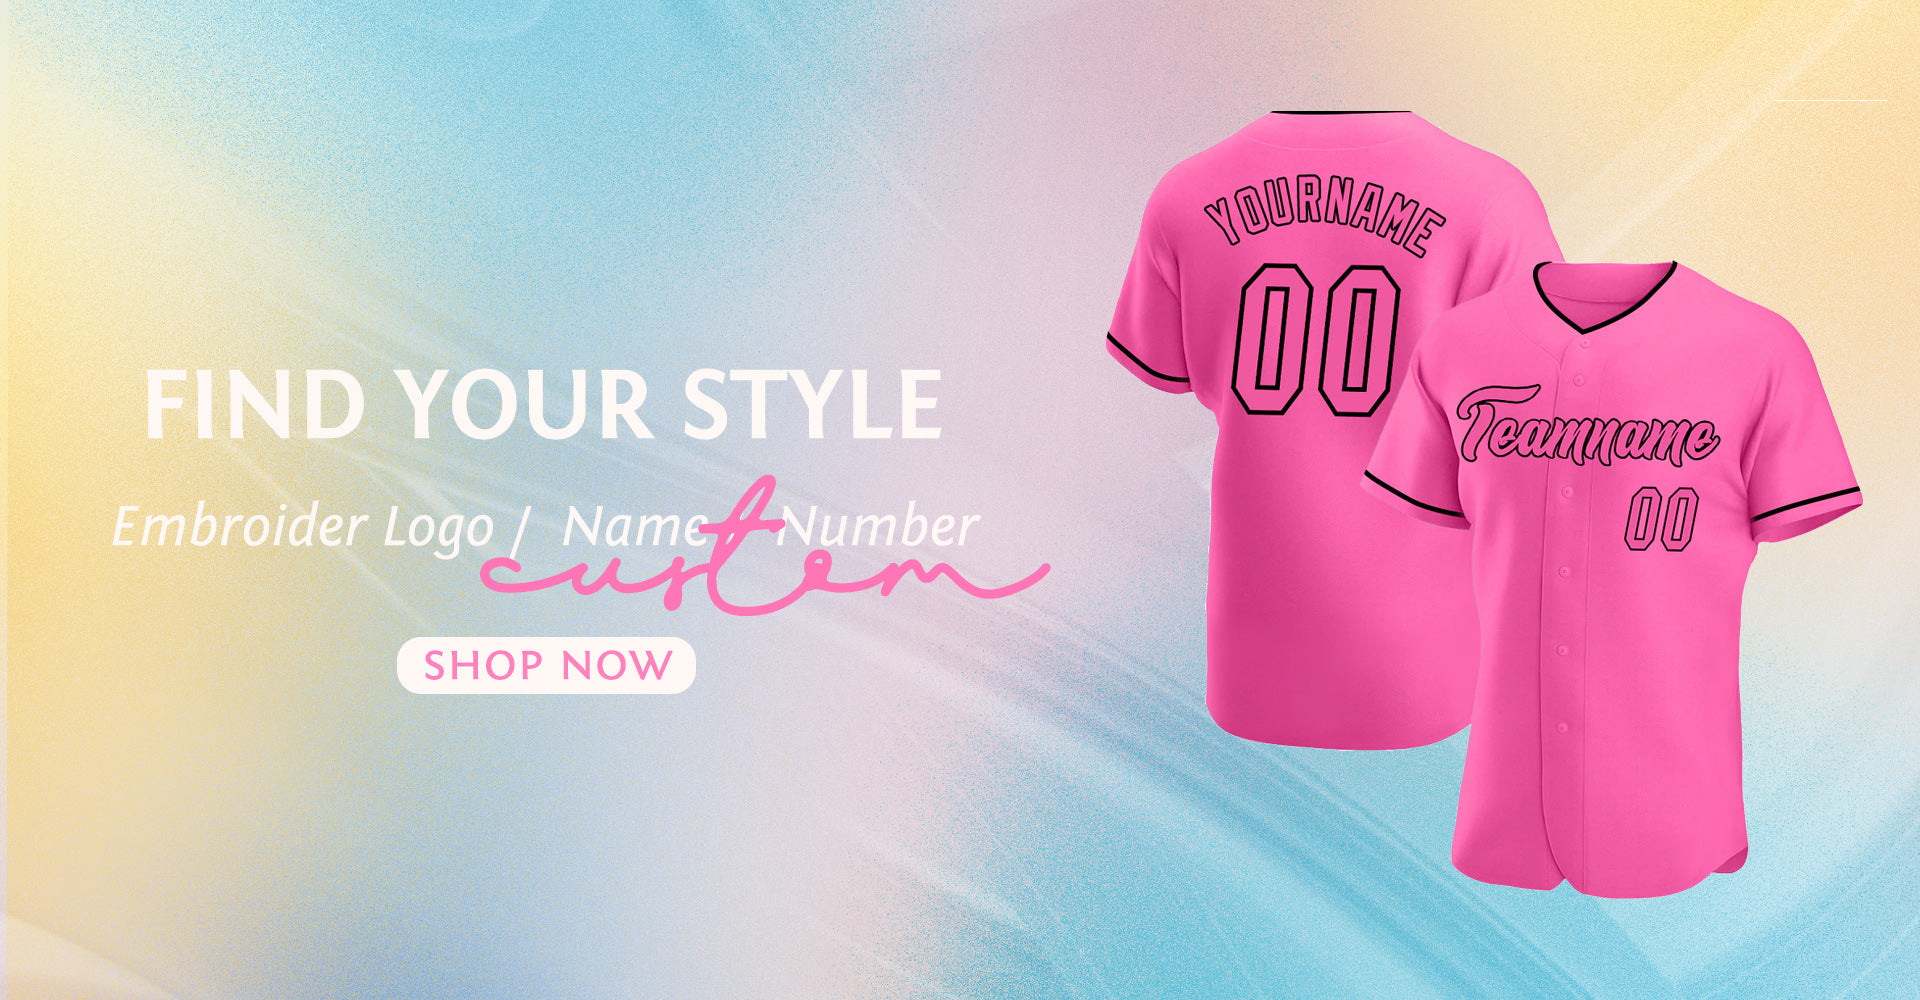 Custom Baseball Pink Jerseys and Uniforms Authentic Sale – FansCustom